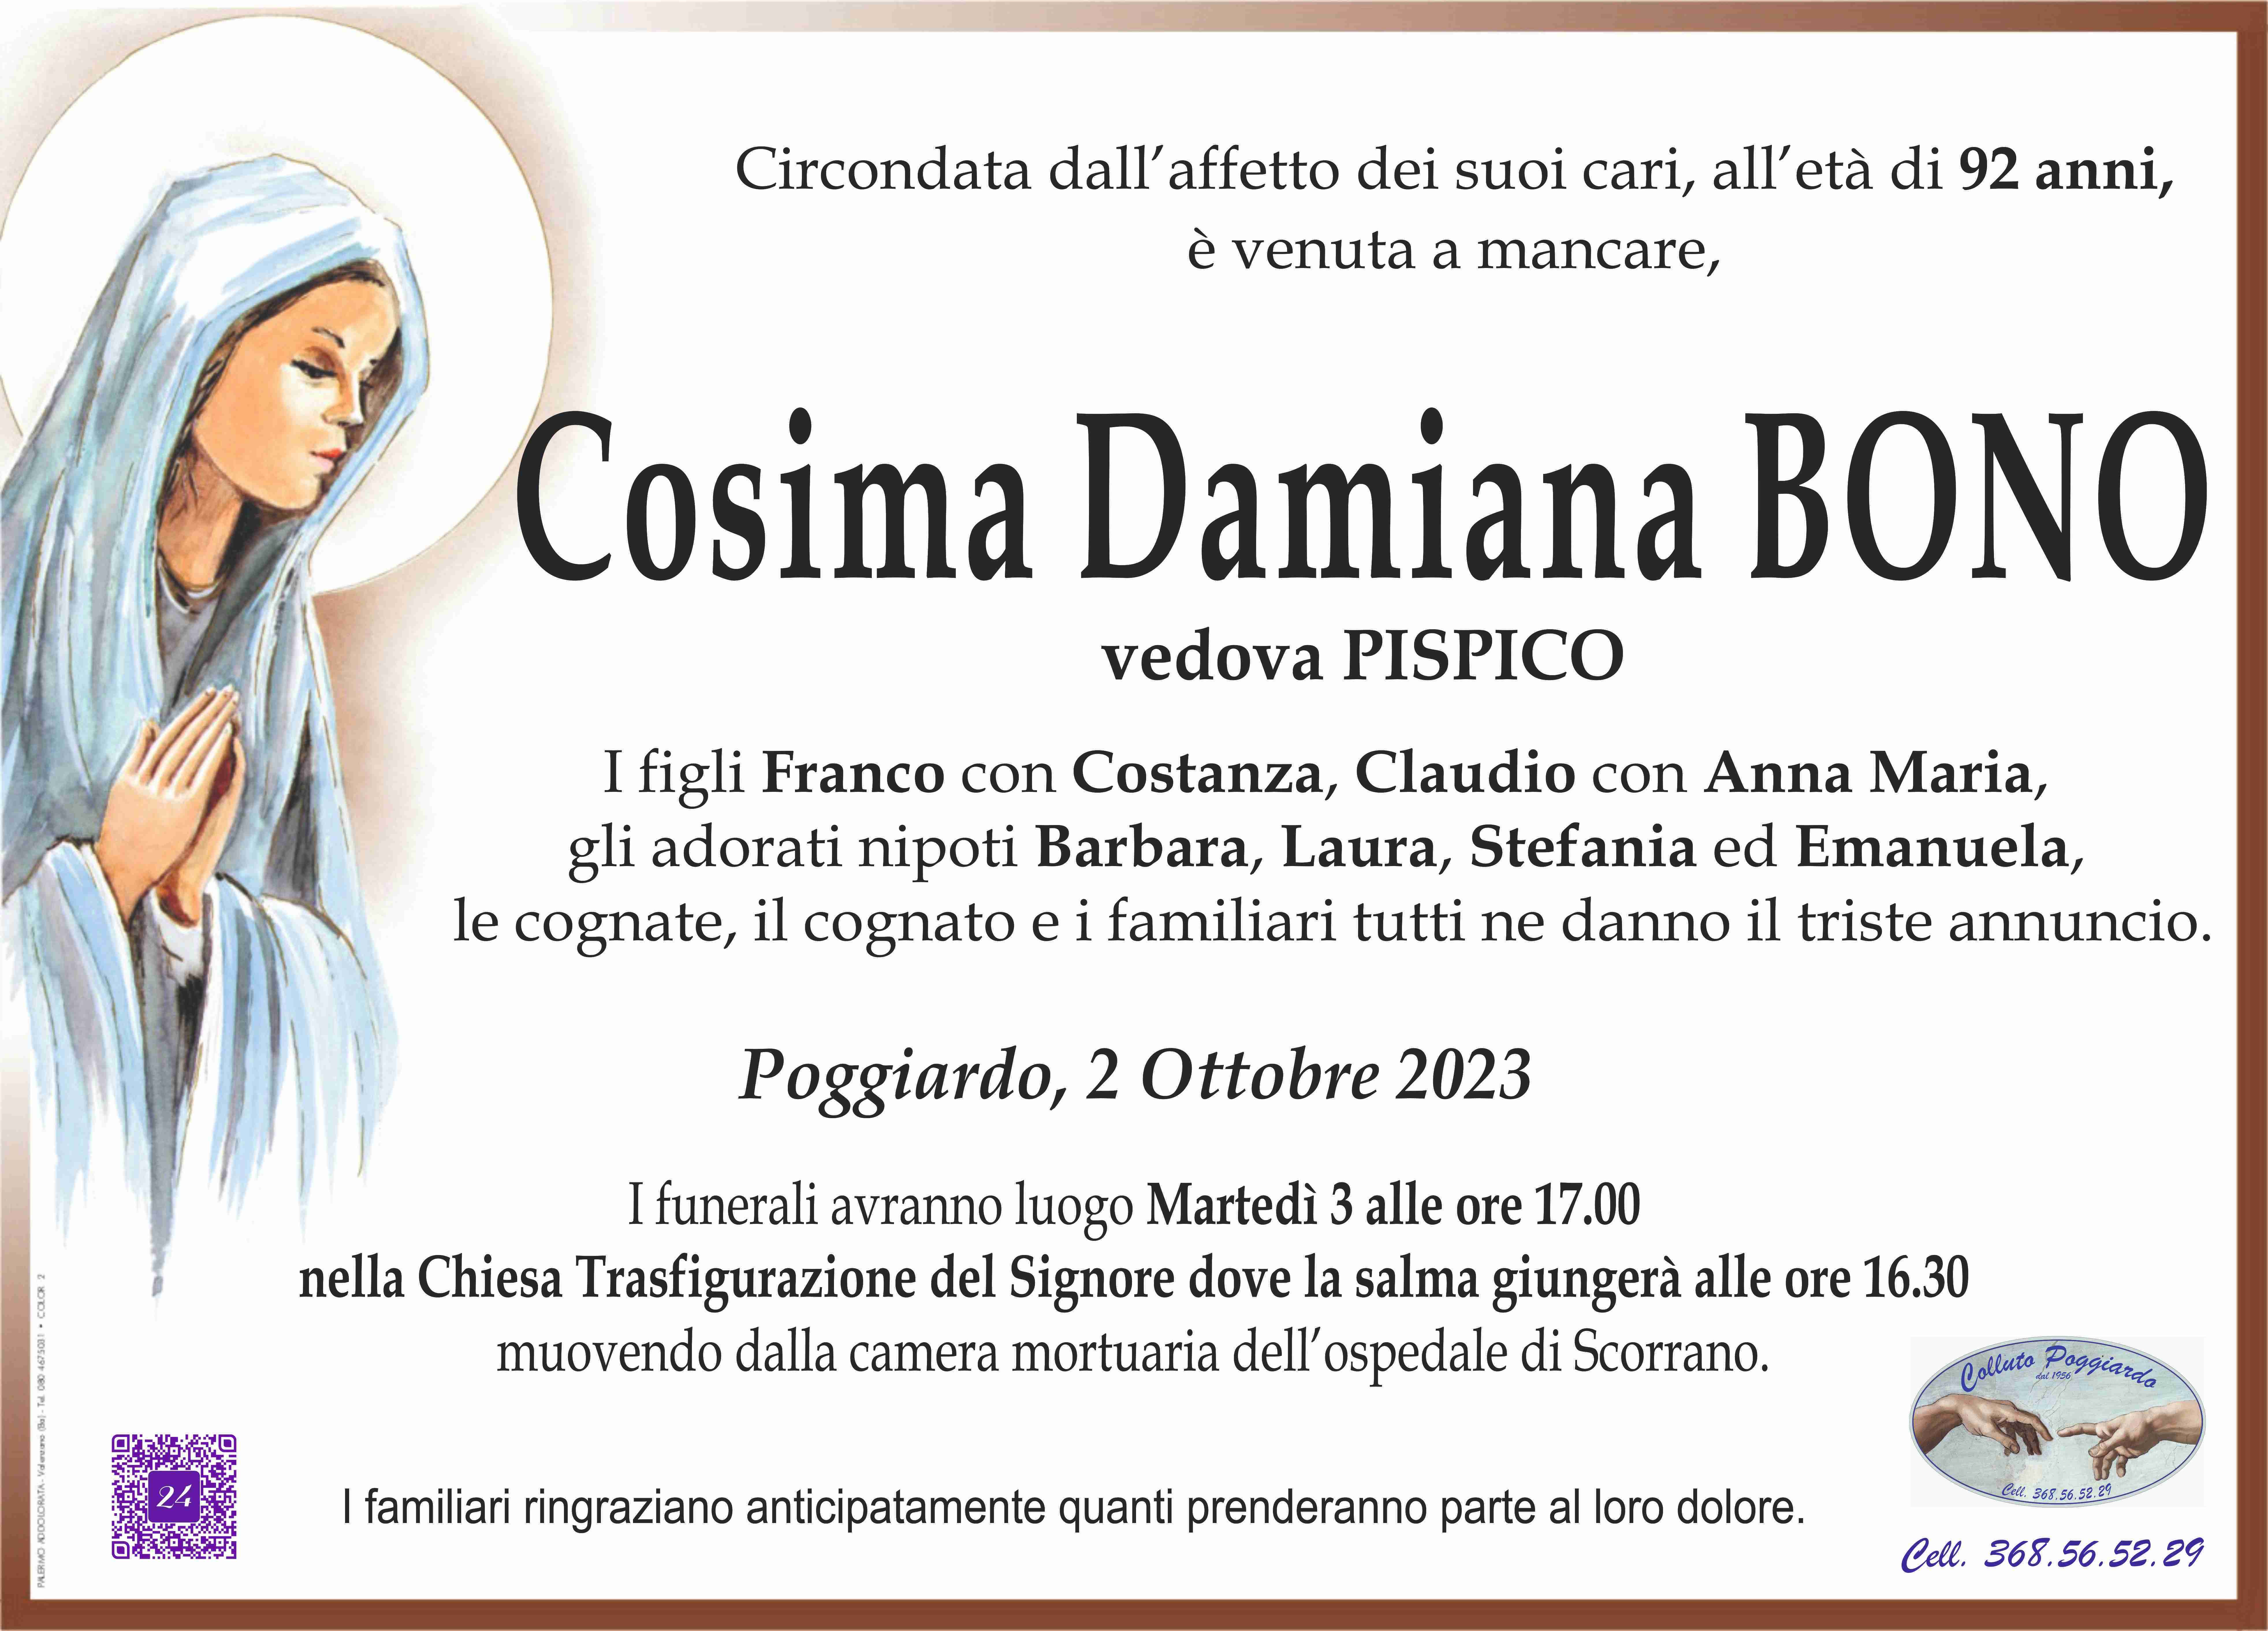 Cosima Damiana Bono